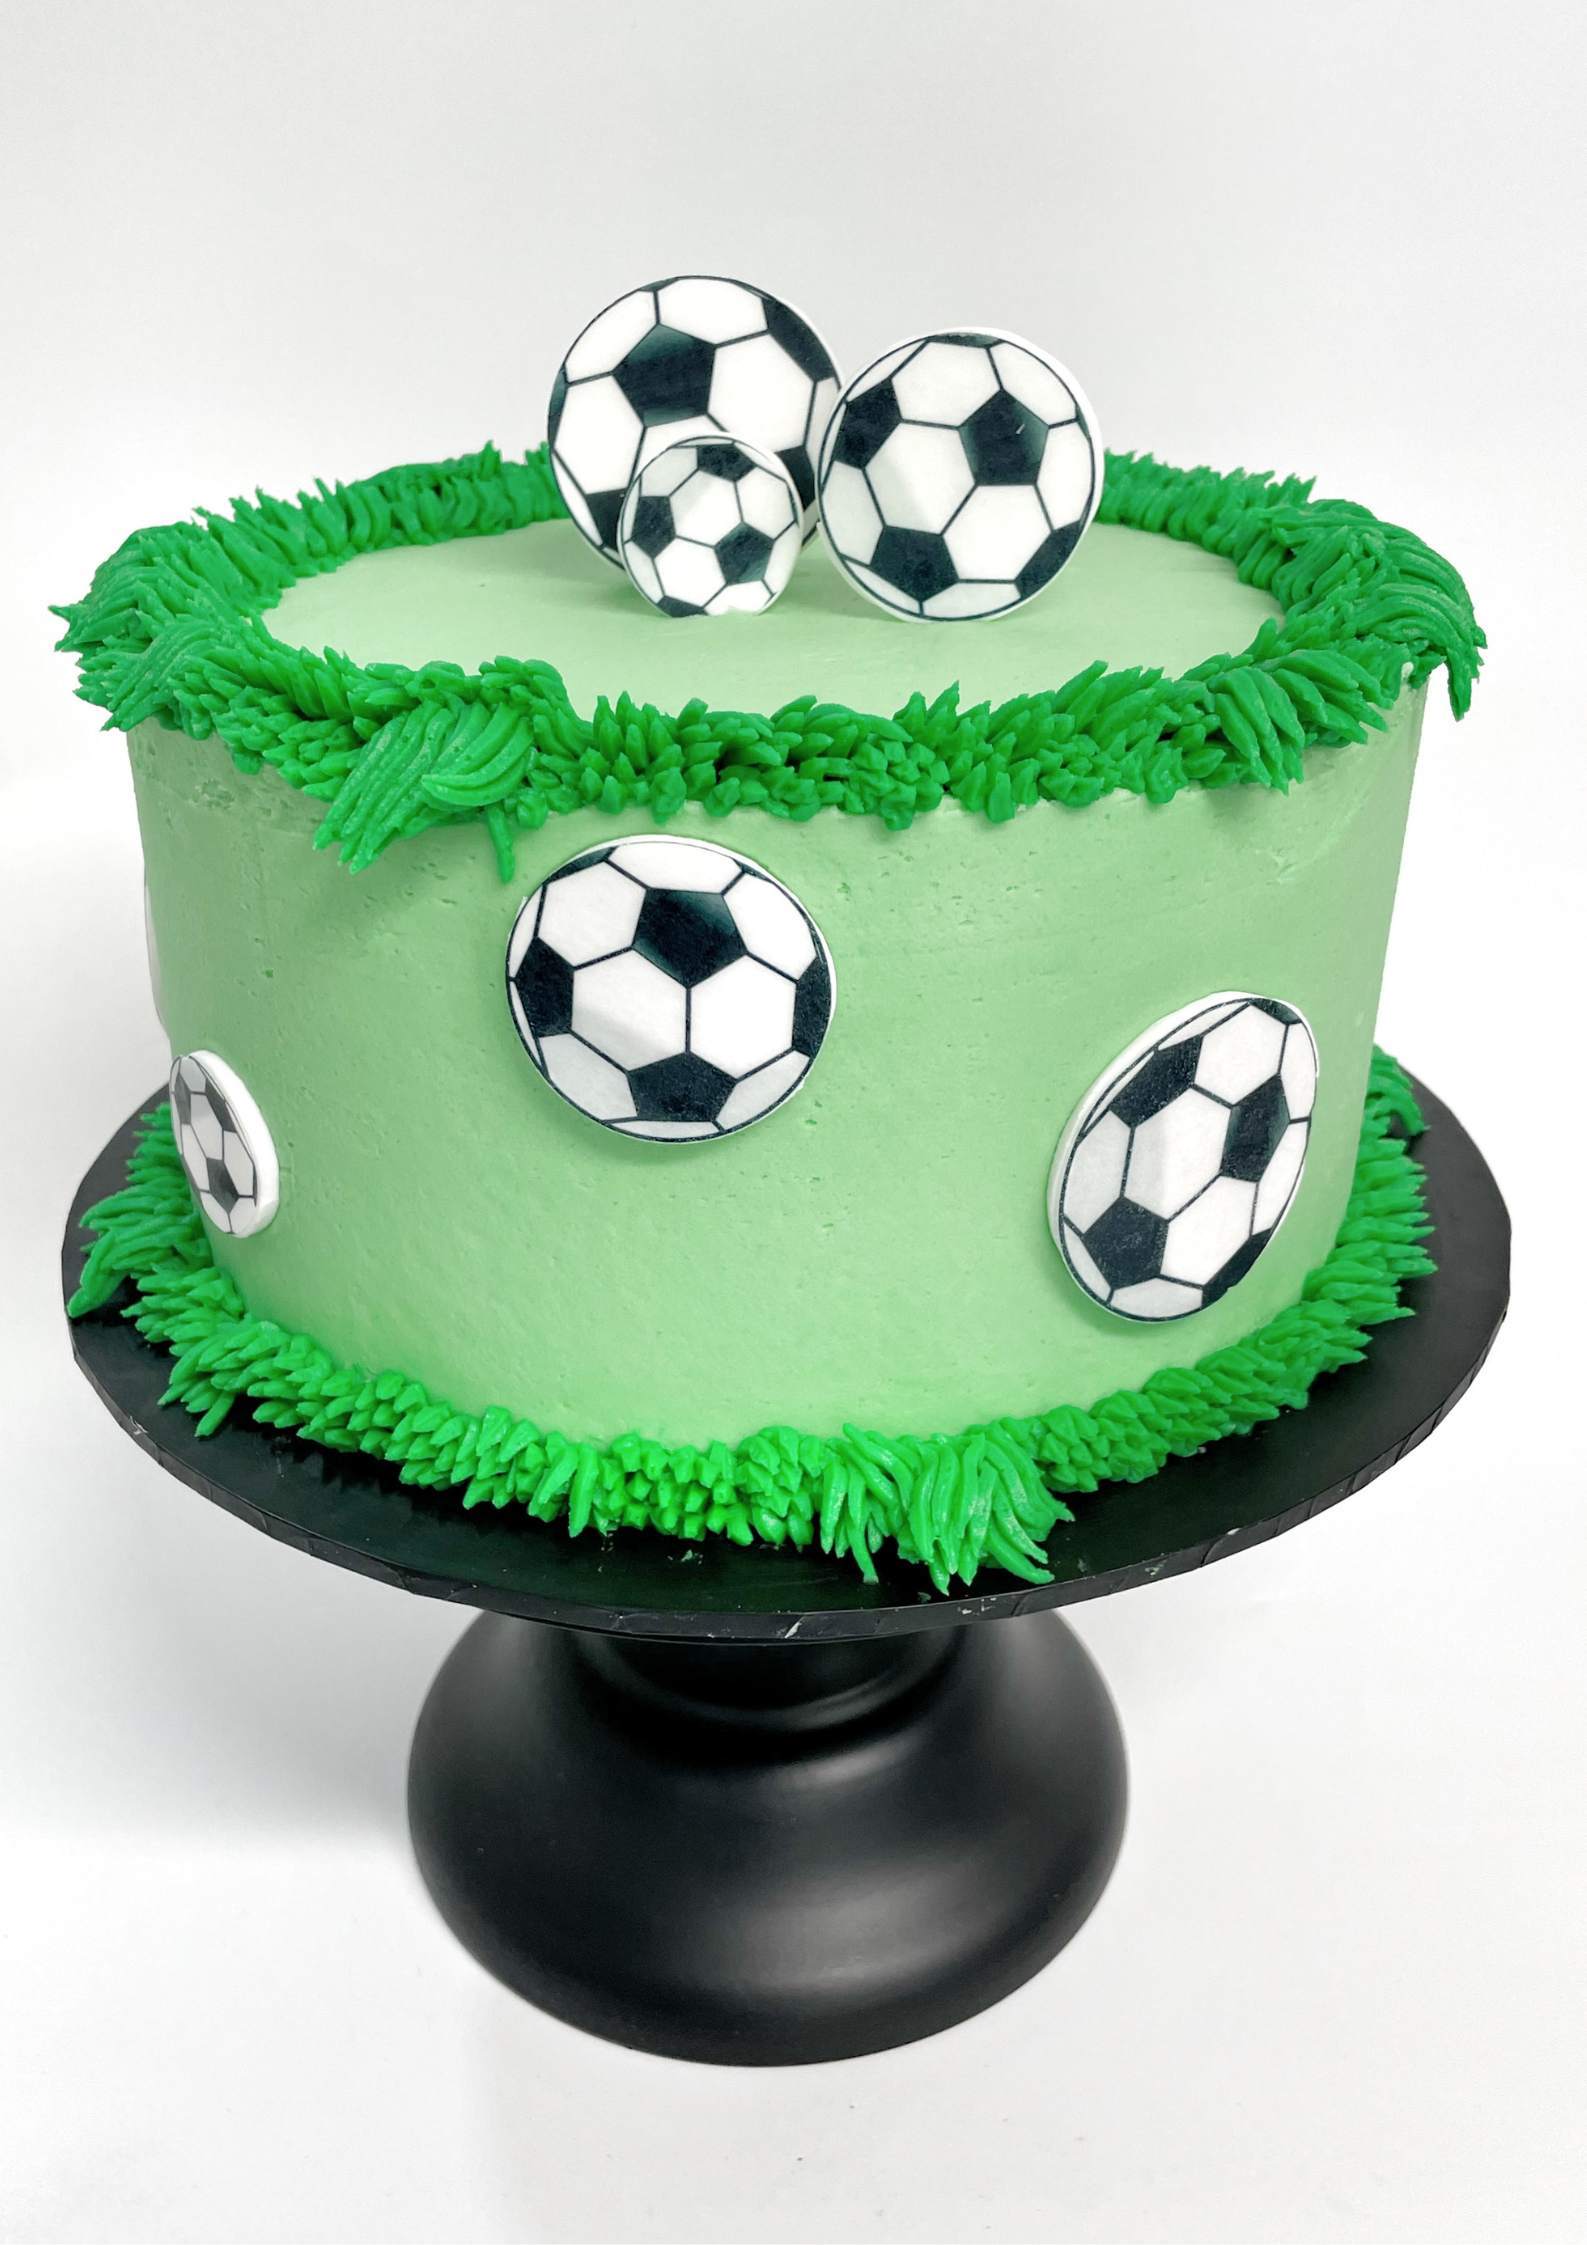 Soccer Ball Cake Pan 3 1 / 2 Inch